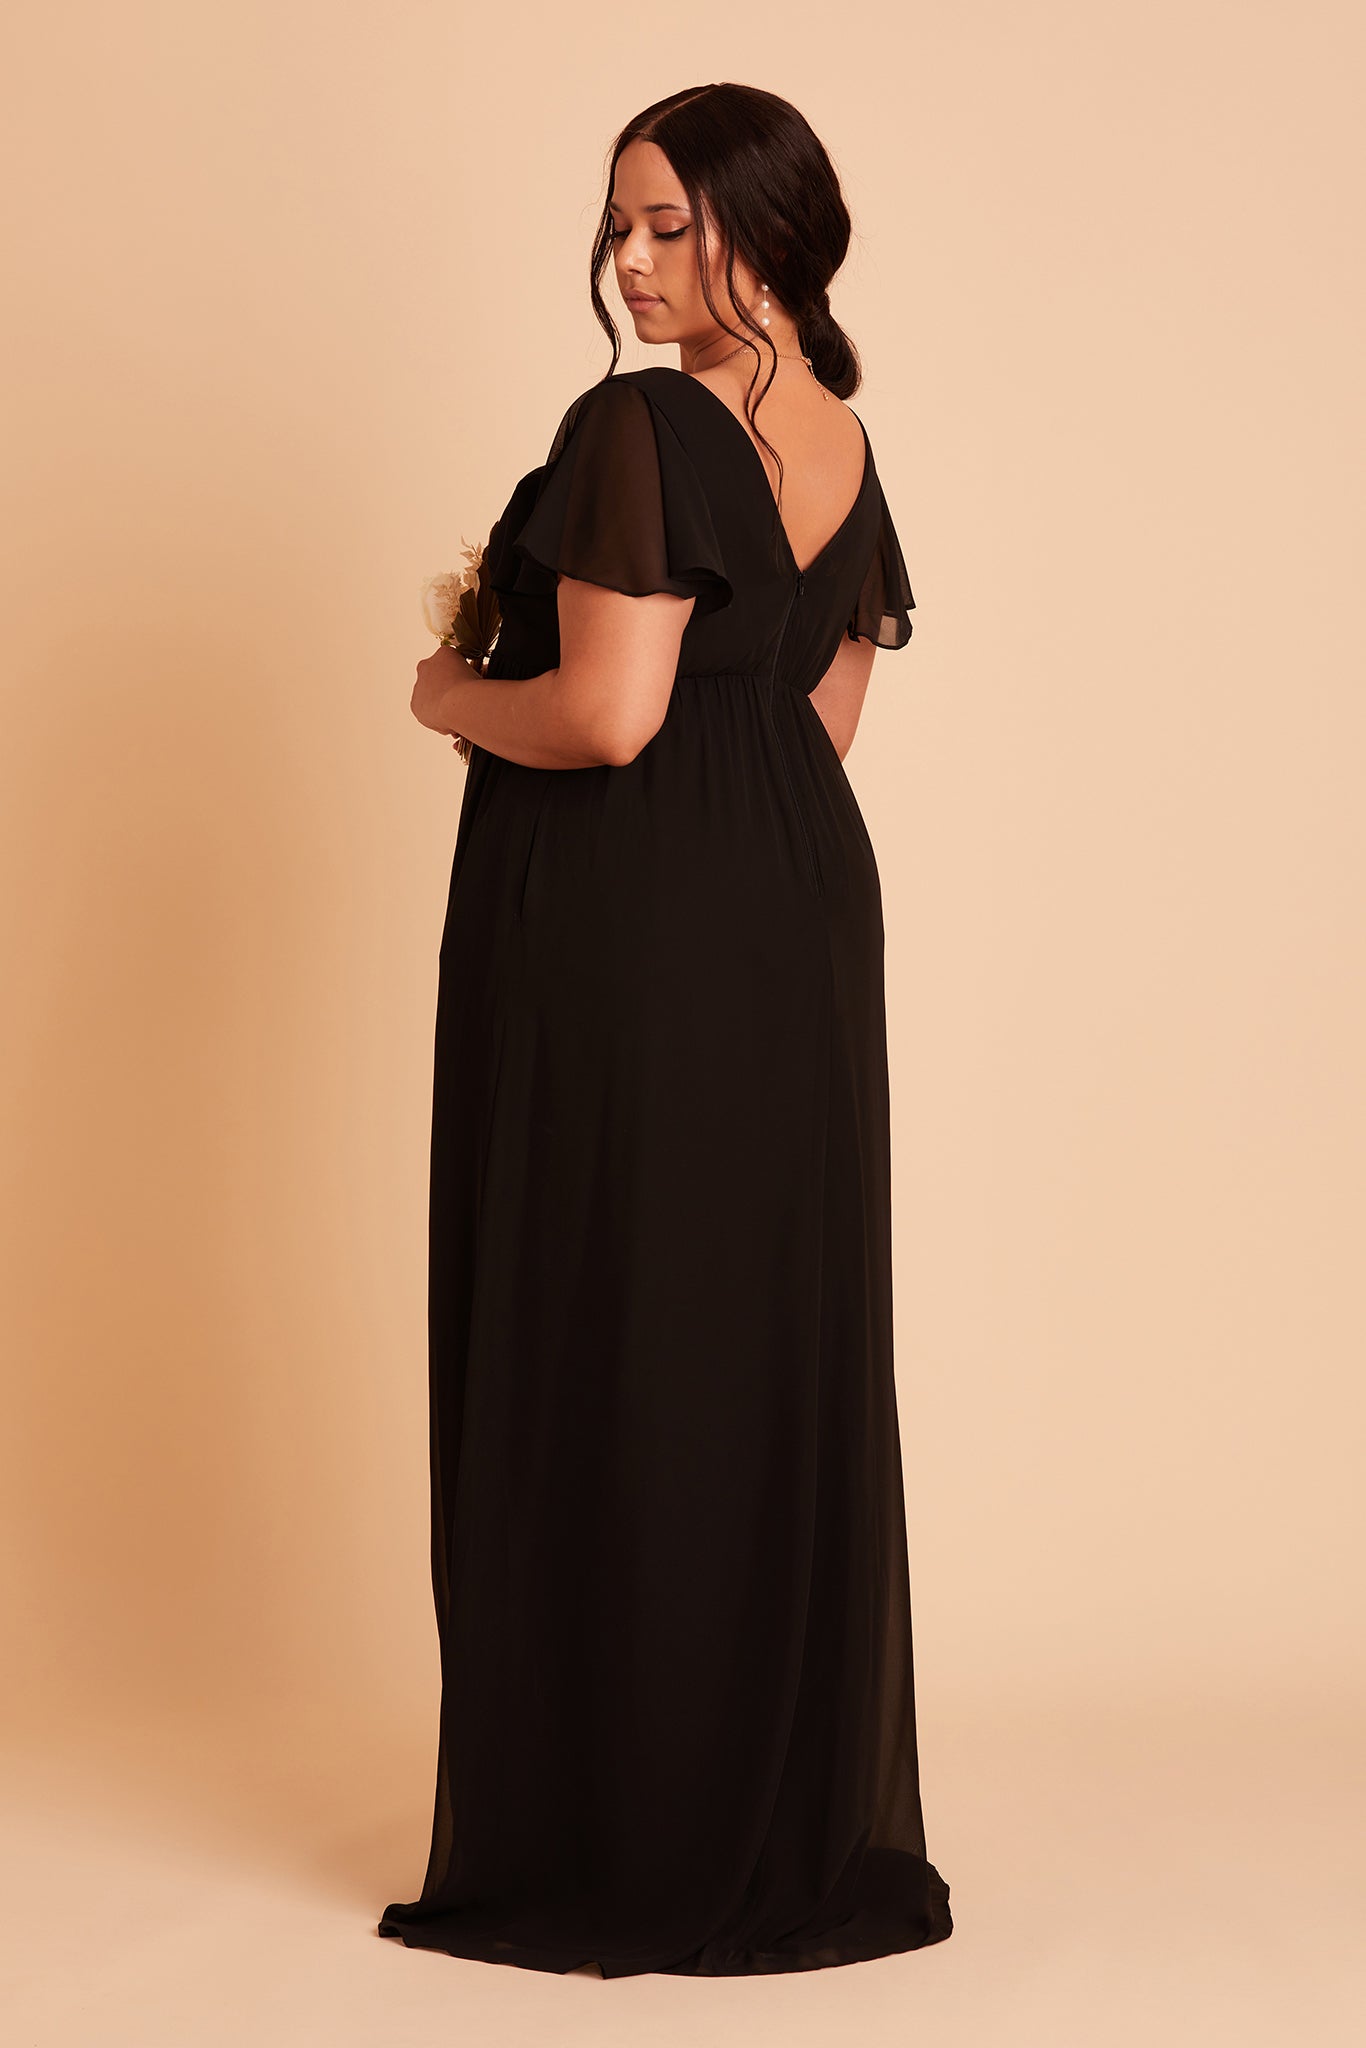 Hannah empire plus size bridesmaid dress in black chiffon by Birdy Grey, side view